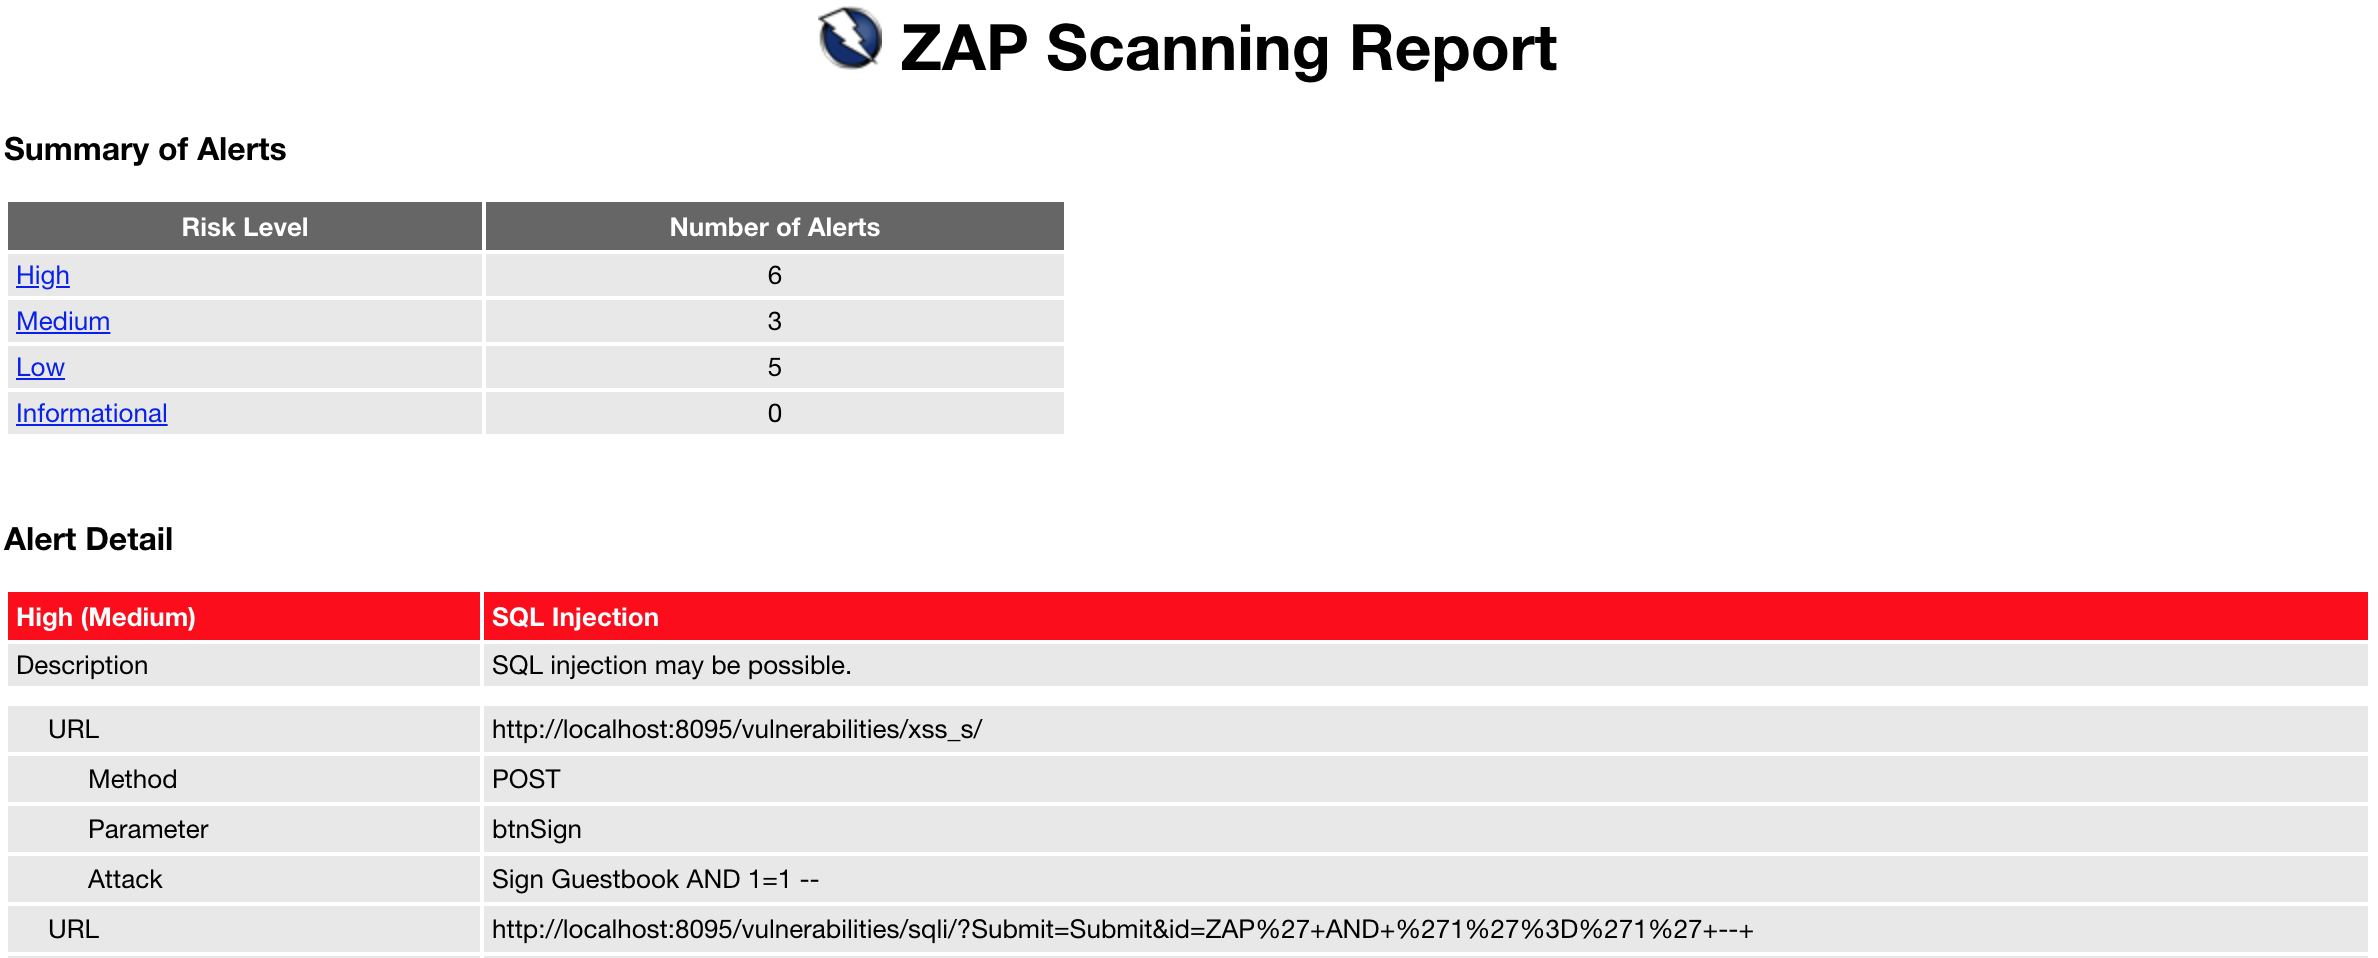 ZAP scanning report image